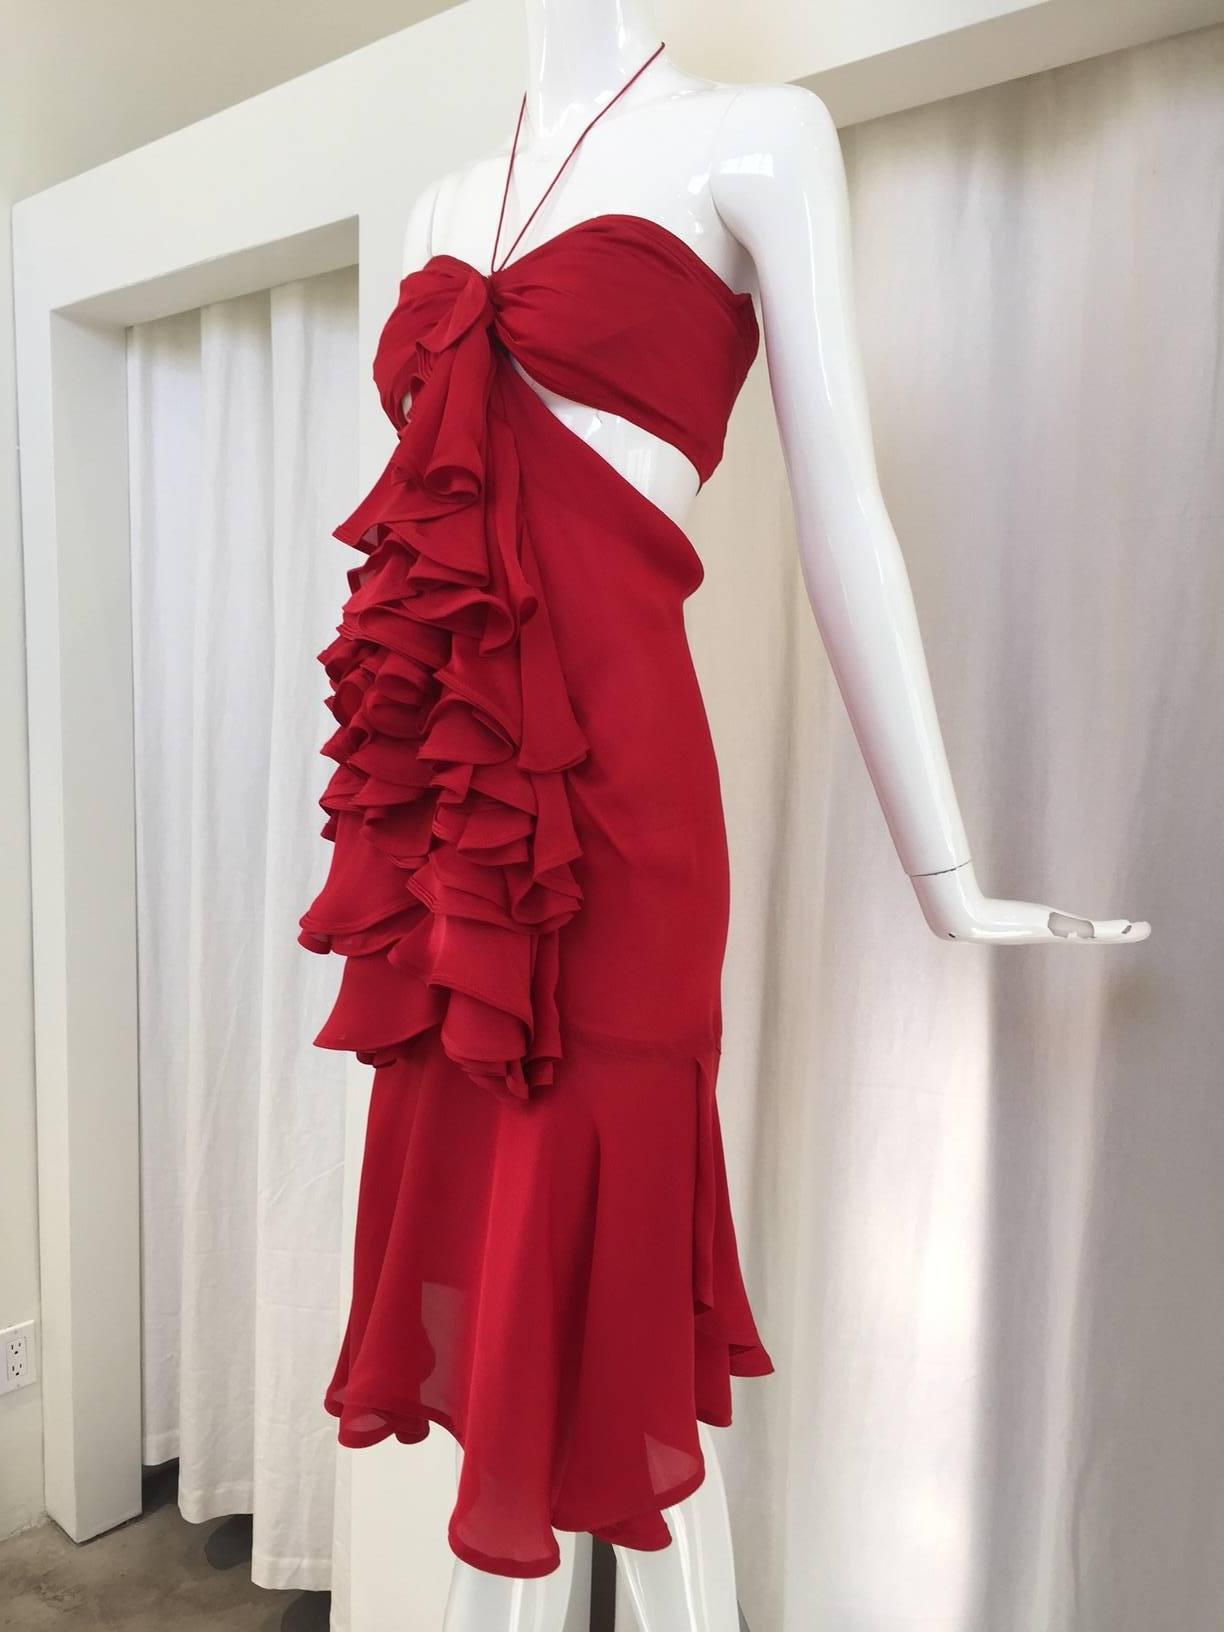 Women's Yves Saint Laurent by Tom Ford red silk ruffle dress